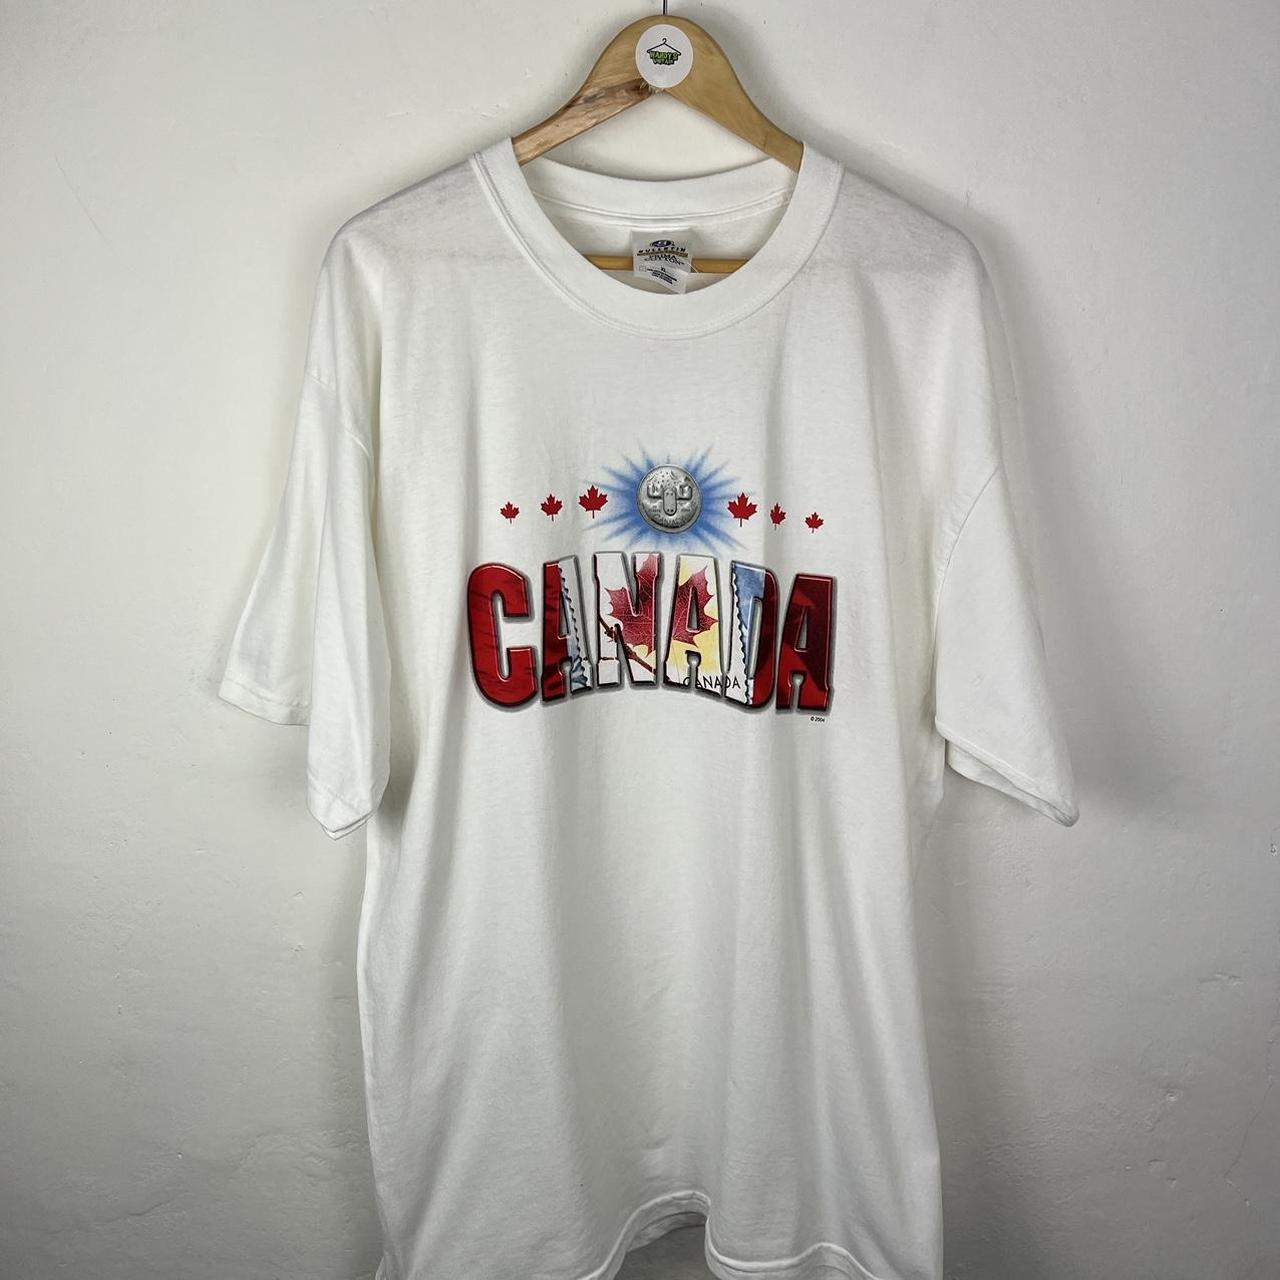 Canada graphic t shirt XL